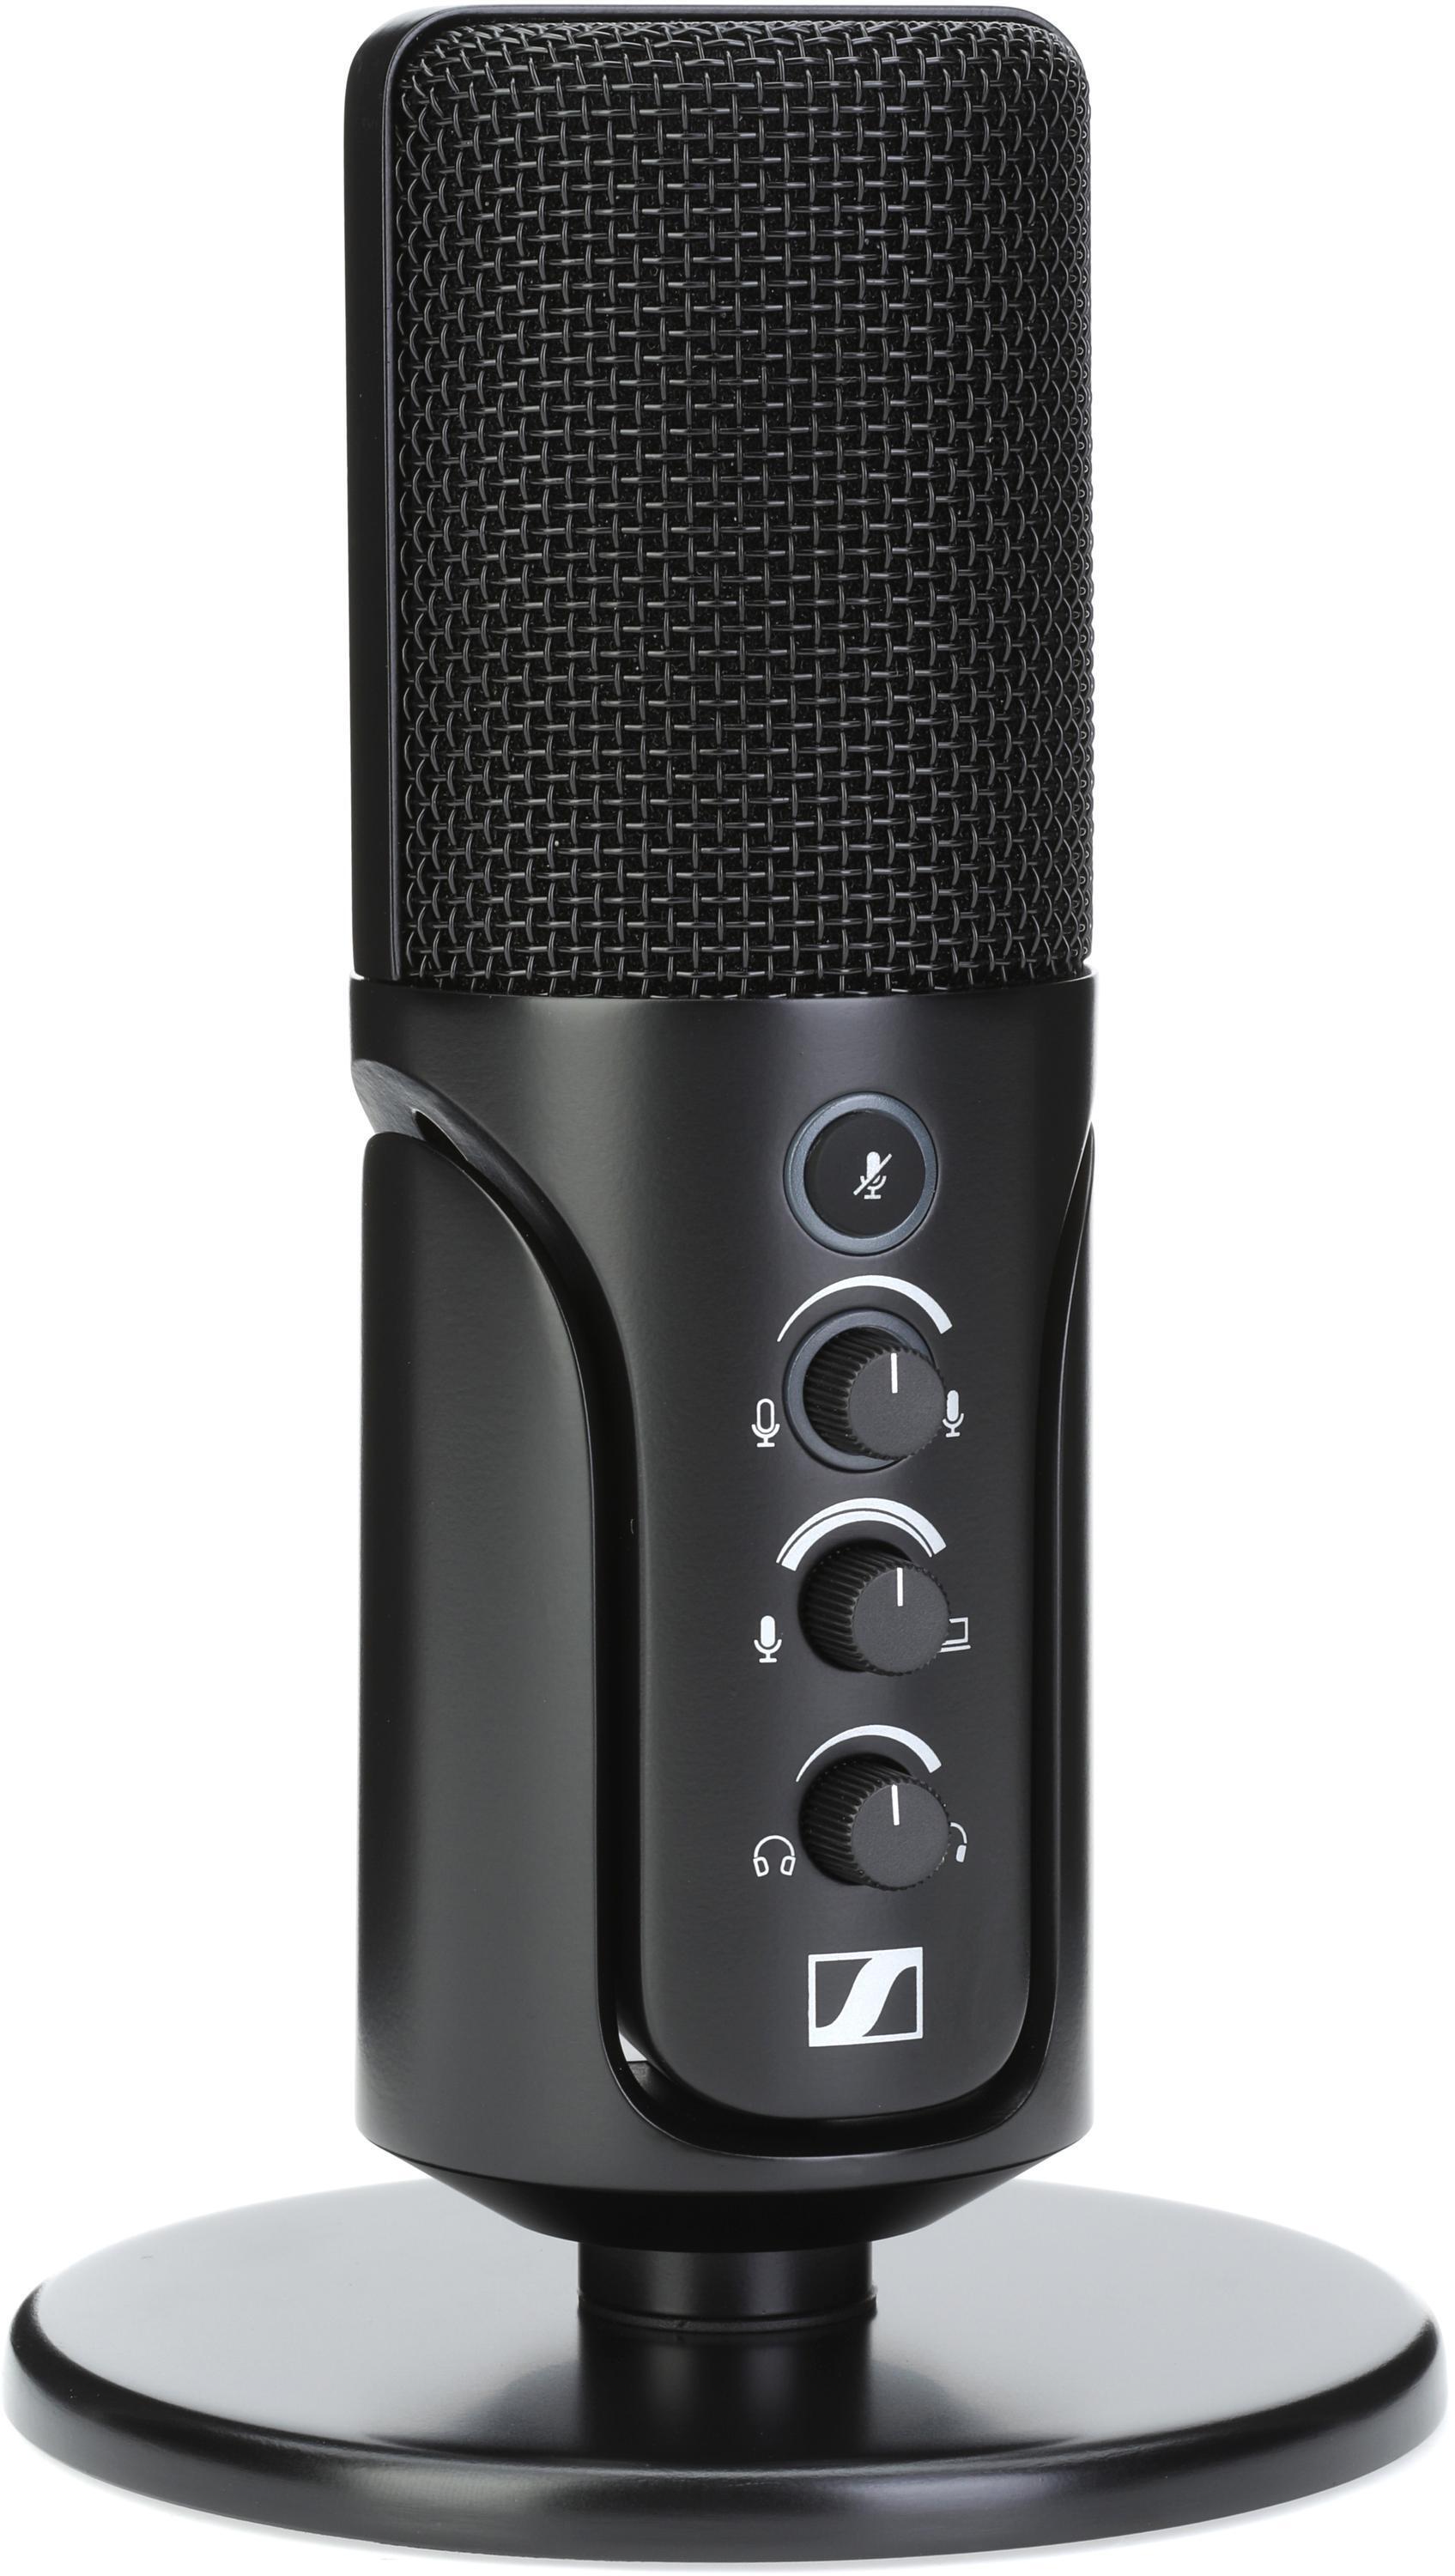 Blue Yeti X Professional USB Microphone with LED Lighting - Black